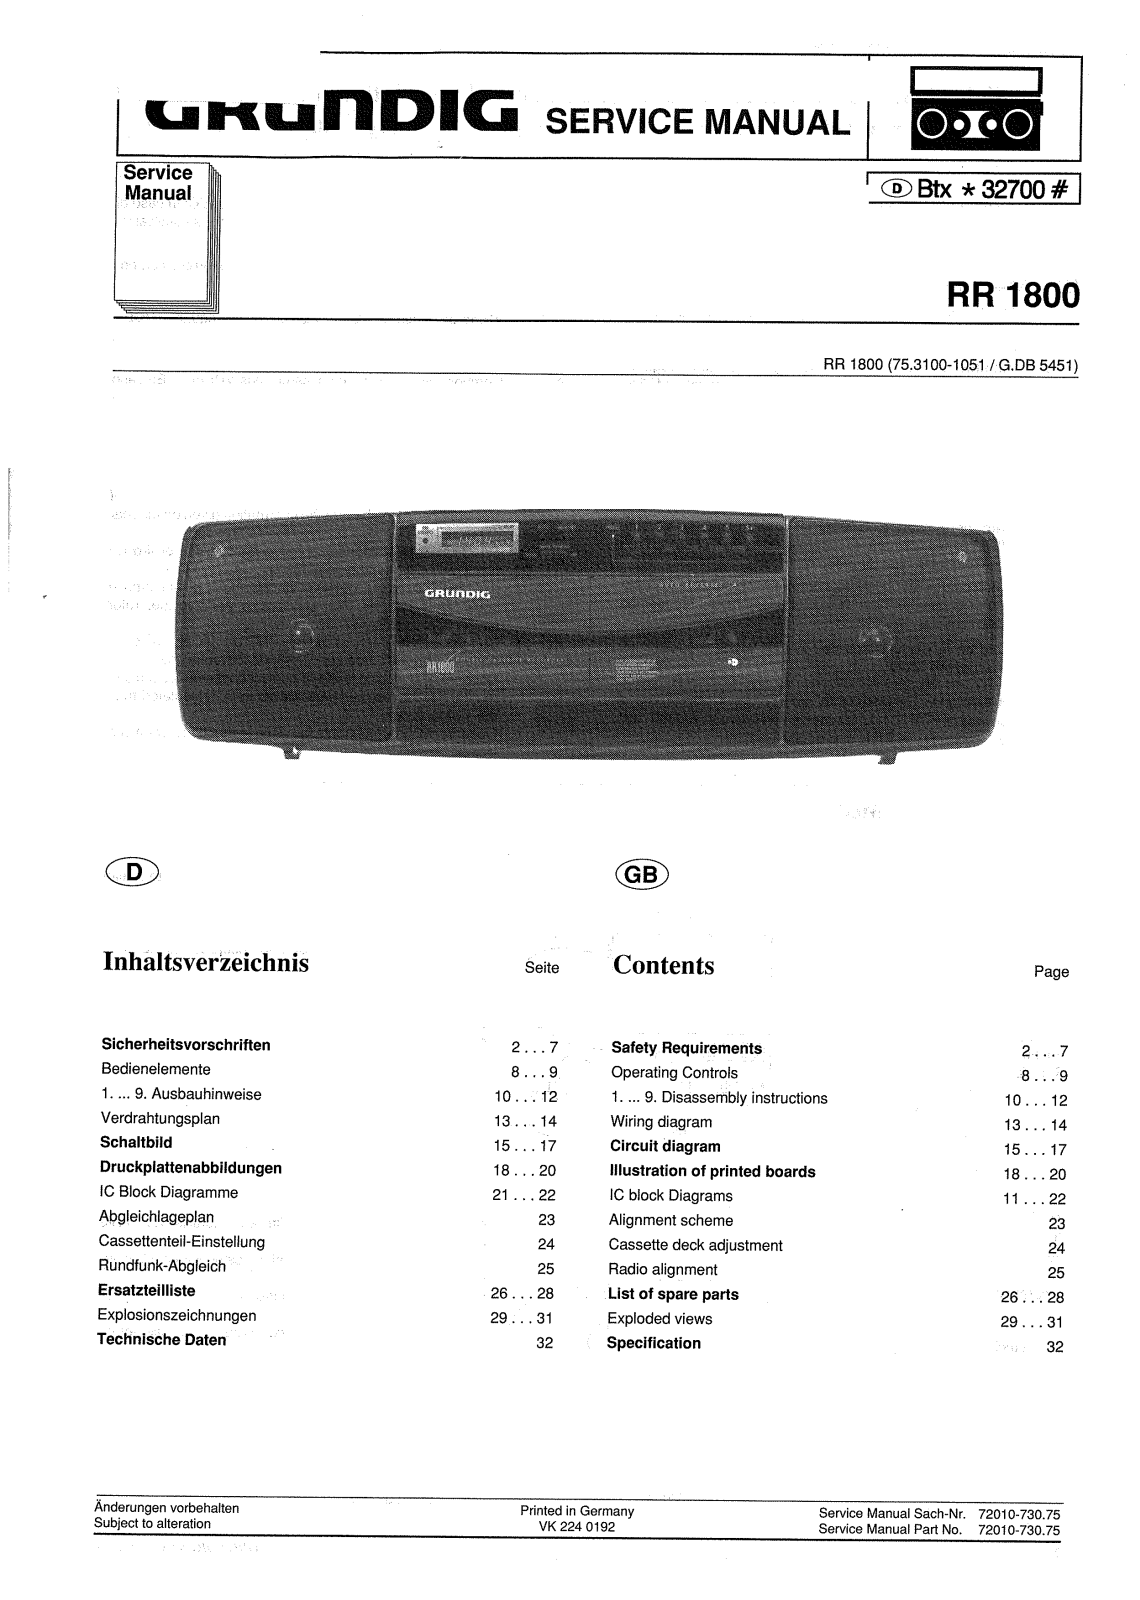 Grundig RR-1800 Service Manual